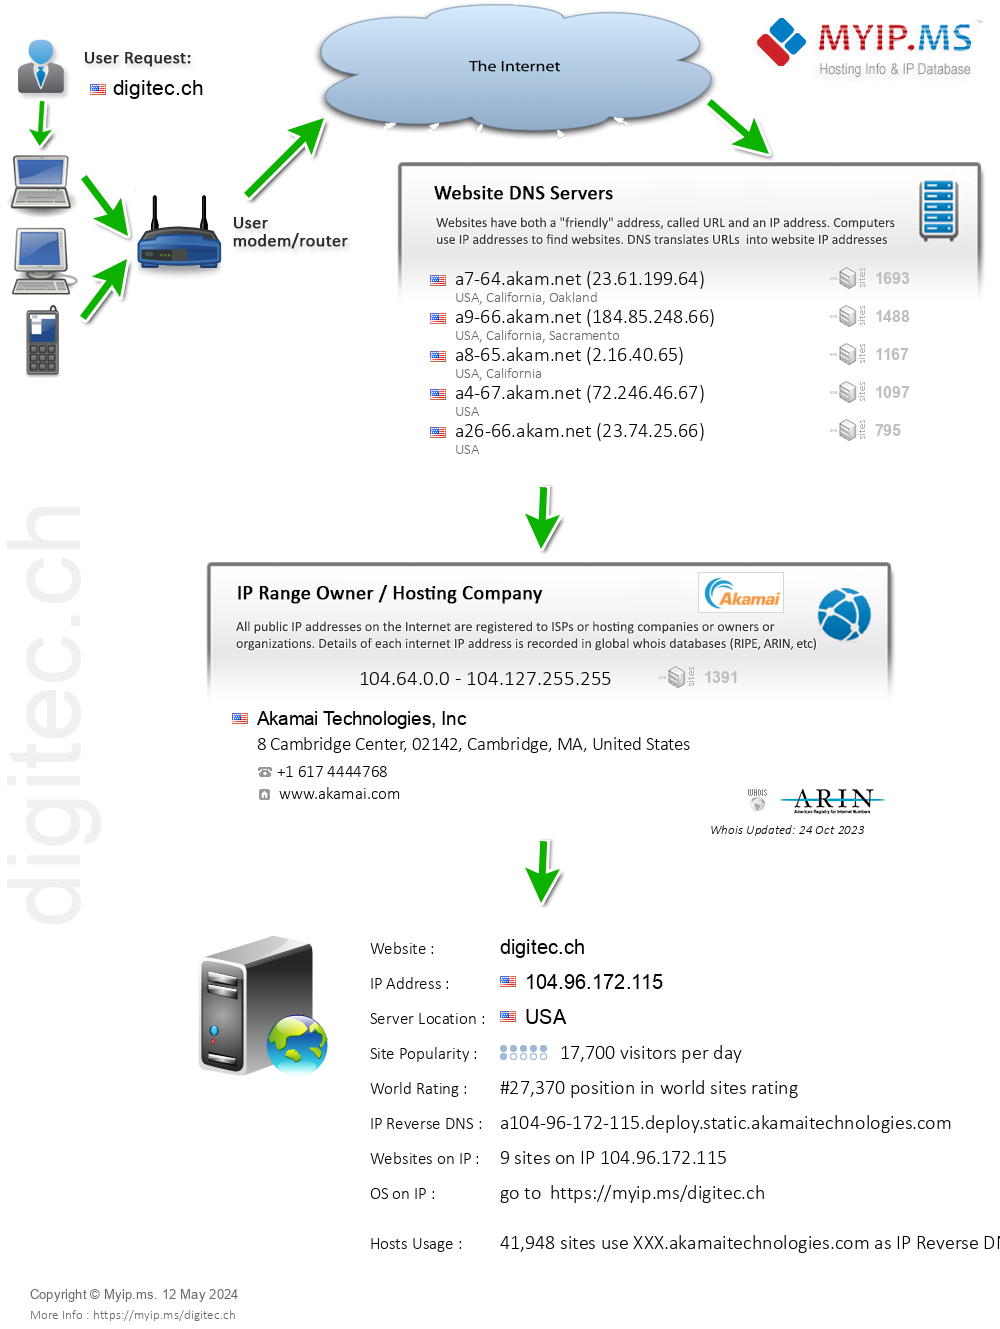 Digitec.ch - Website Hosting Visual IP Diagram